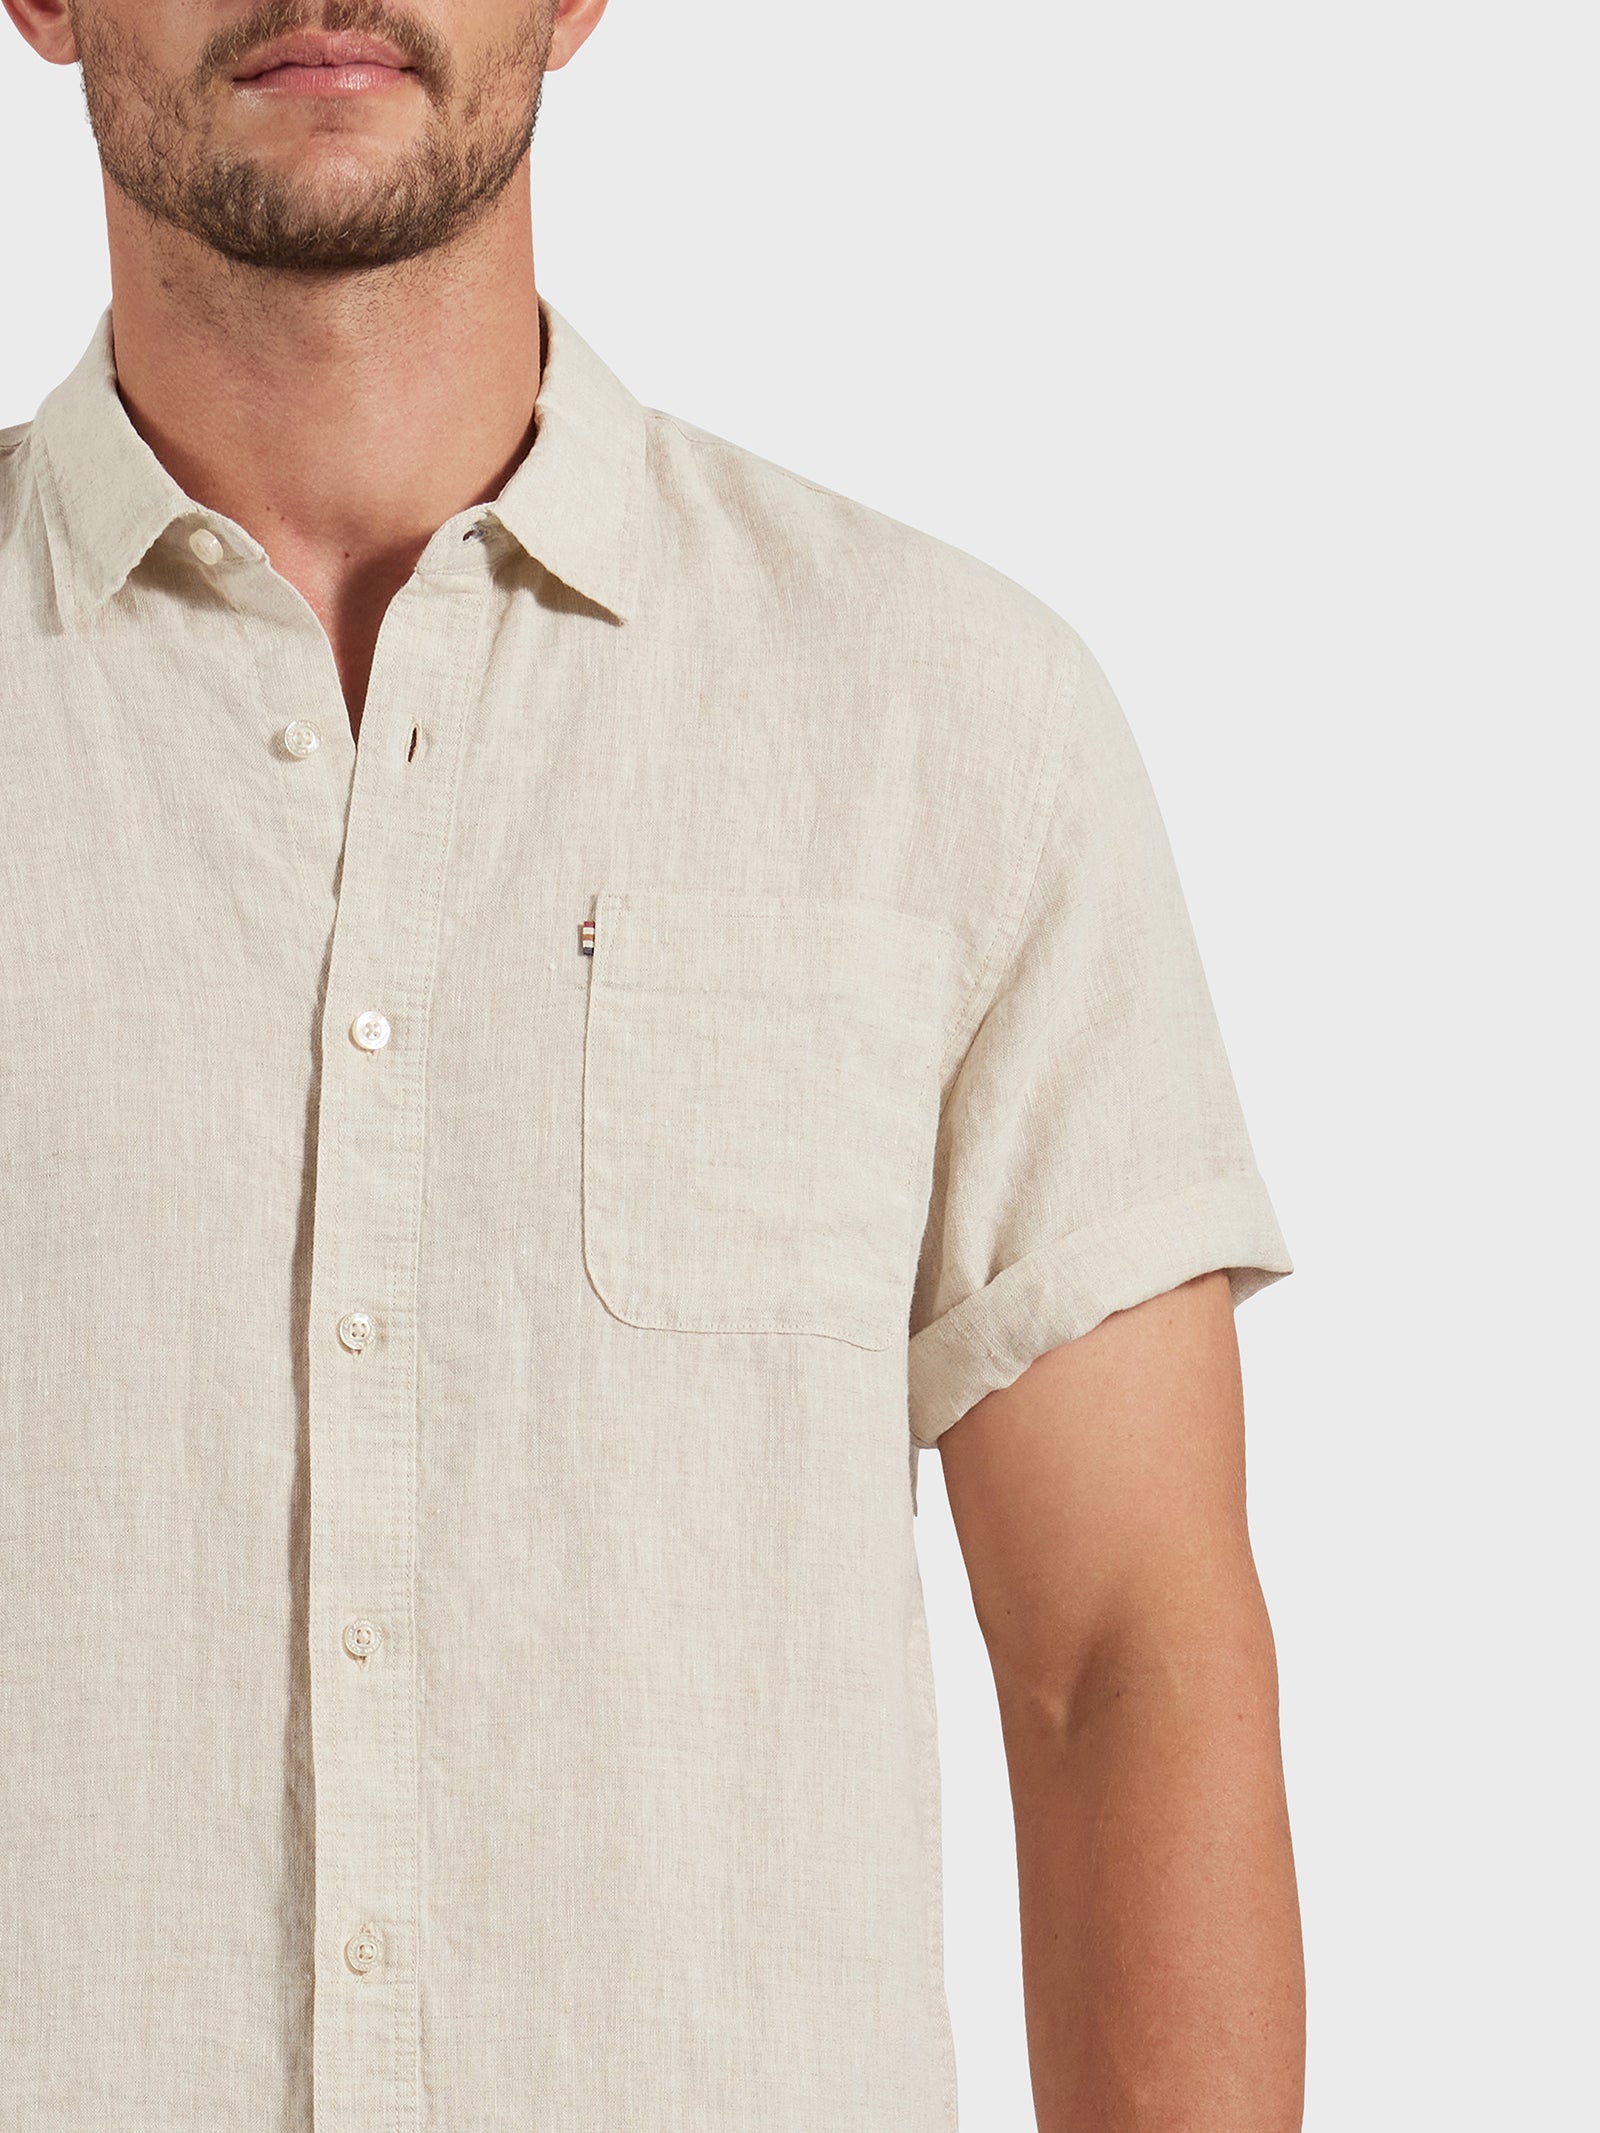 Hampton Linen Short Sleeve Shirt in Oatmeal - Glue Store